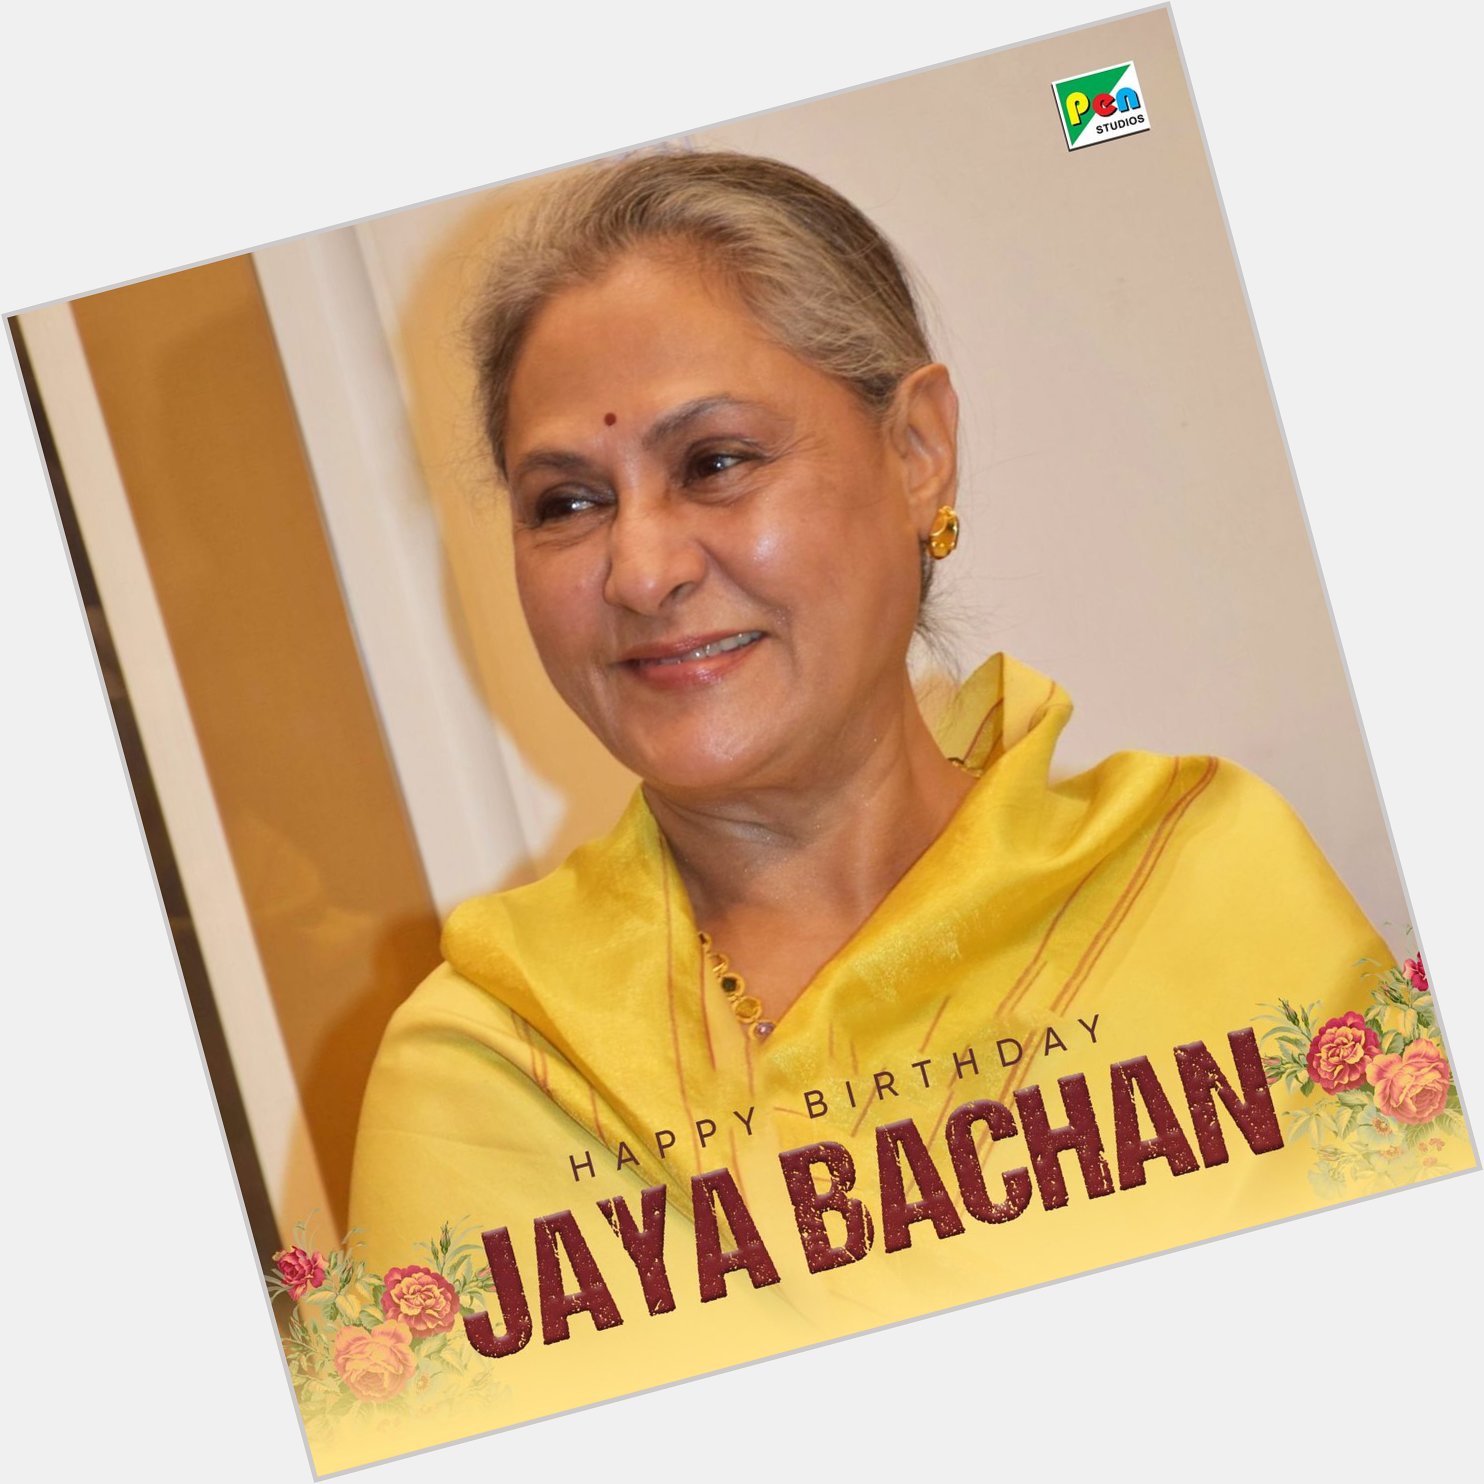 Wishing the beautiful Jaya Bachchan Ji a very Happy Birthday!     